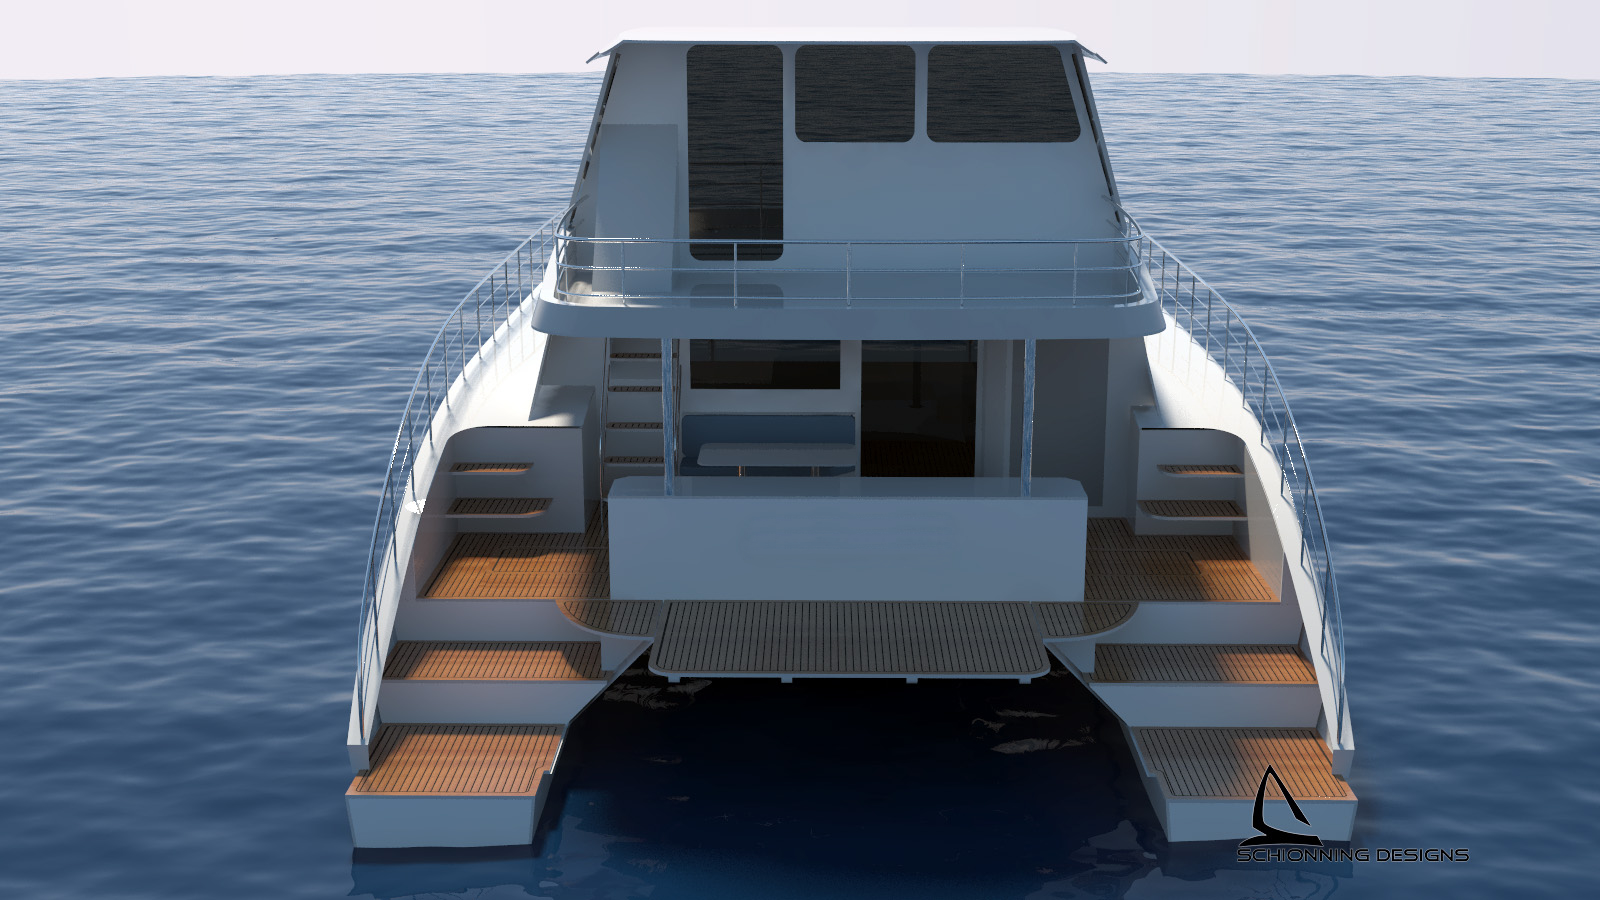 Schionning Designs Prowler 1500 Power Catamaran - Exterior CAD Render 011